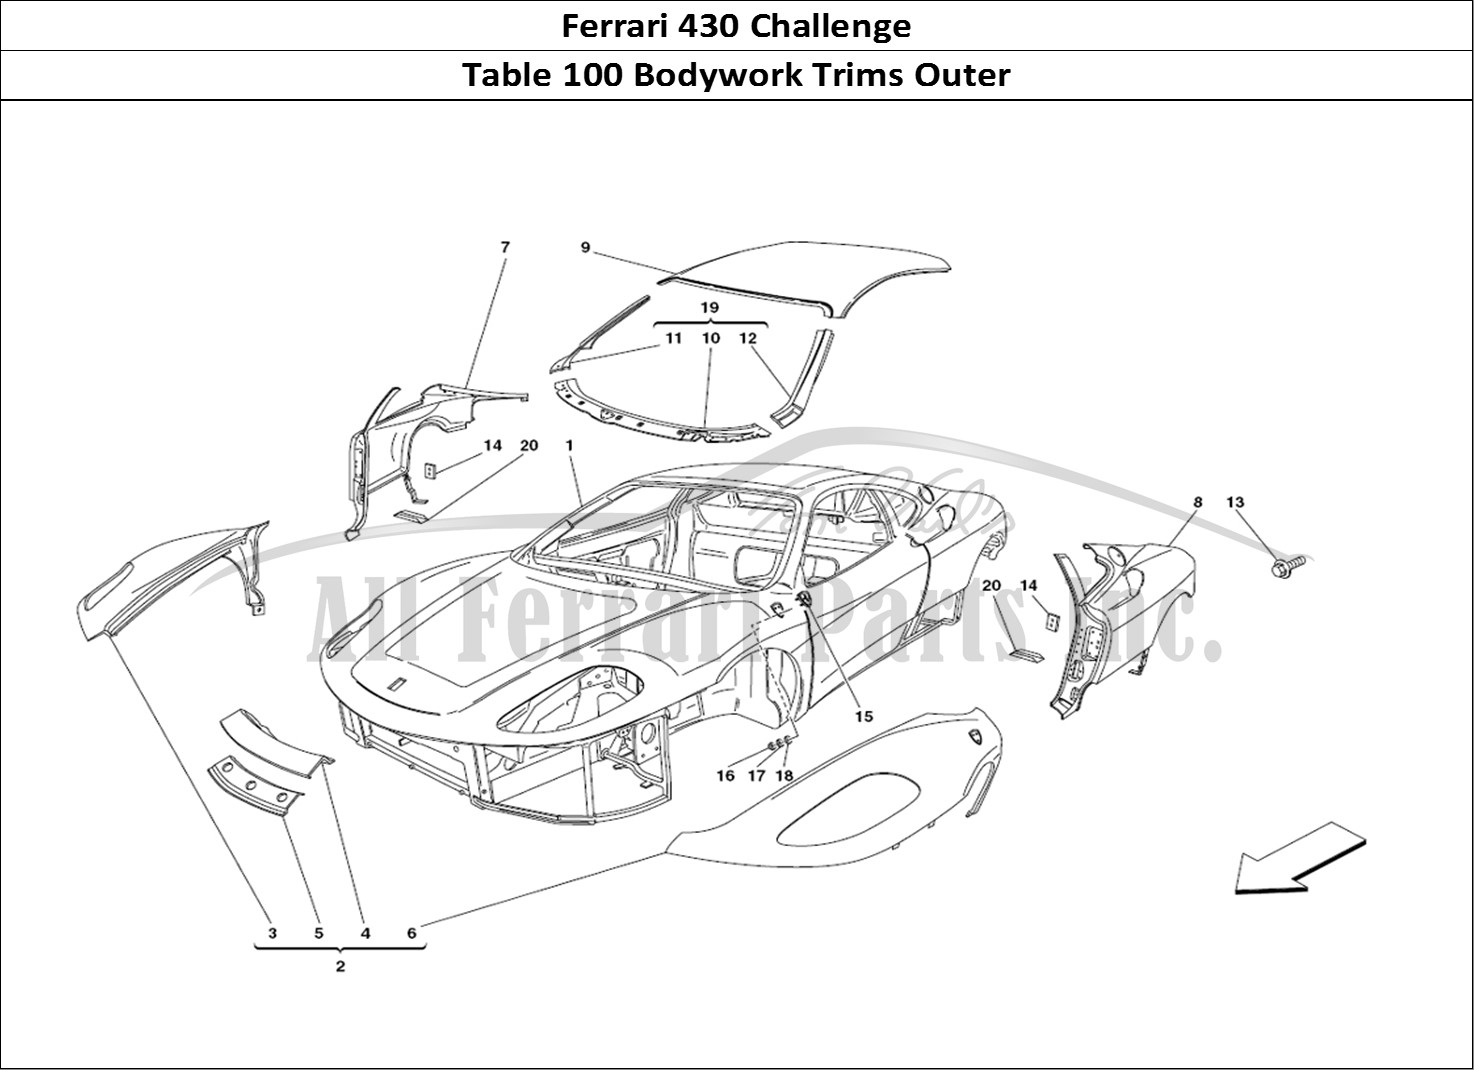 Ferrari Parts Ferrari 430 Challenge (2006) Page 100 Body - Outer Trims